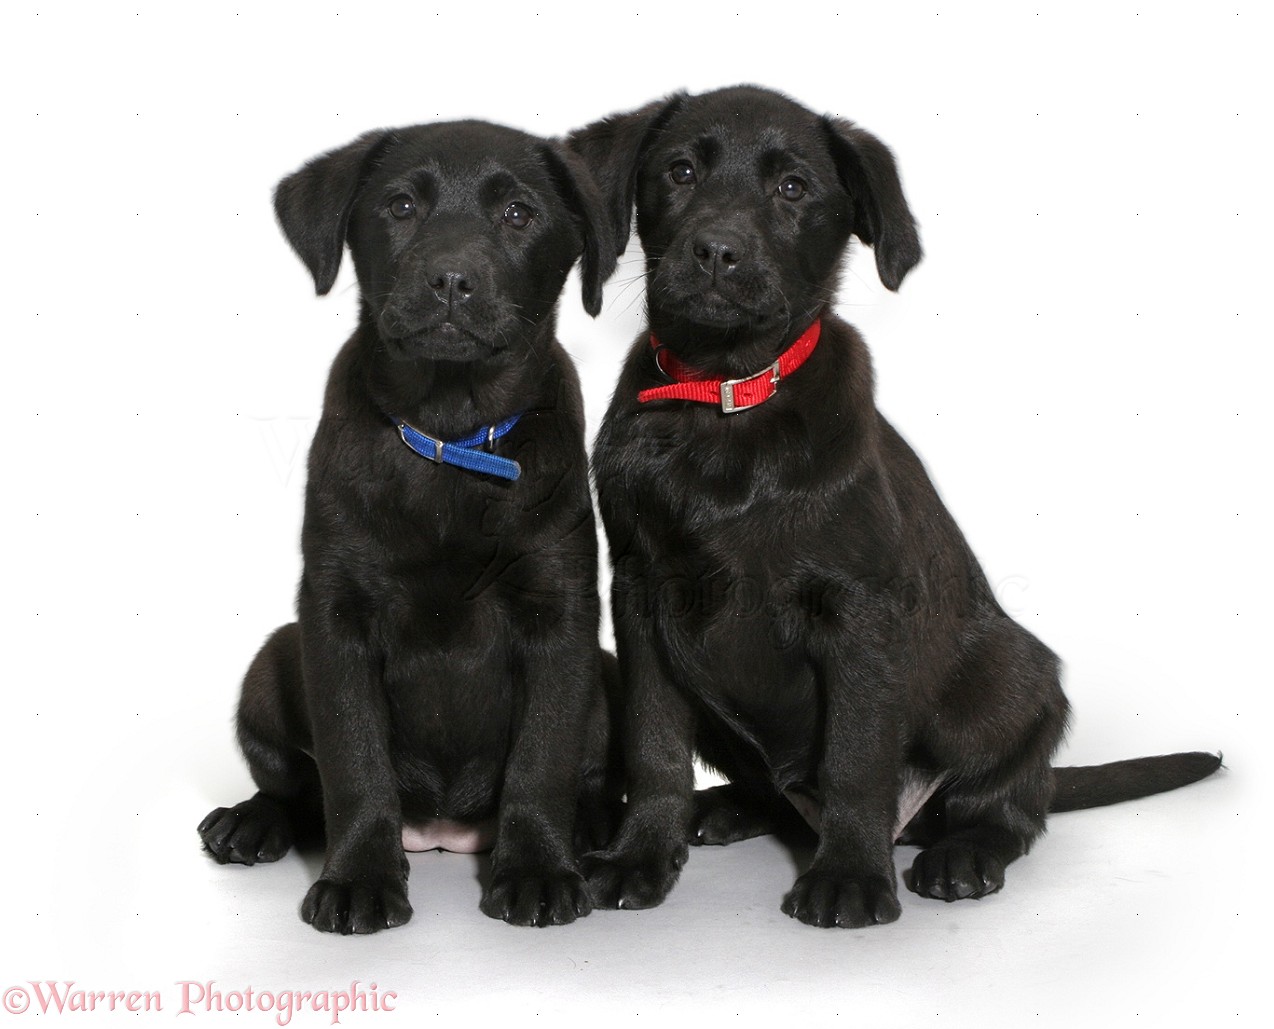 35951-Two-Black-Labrador-Retriever-pups-sitting-white-background.jpg